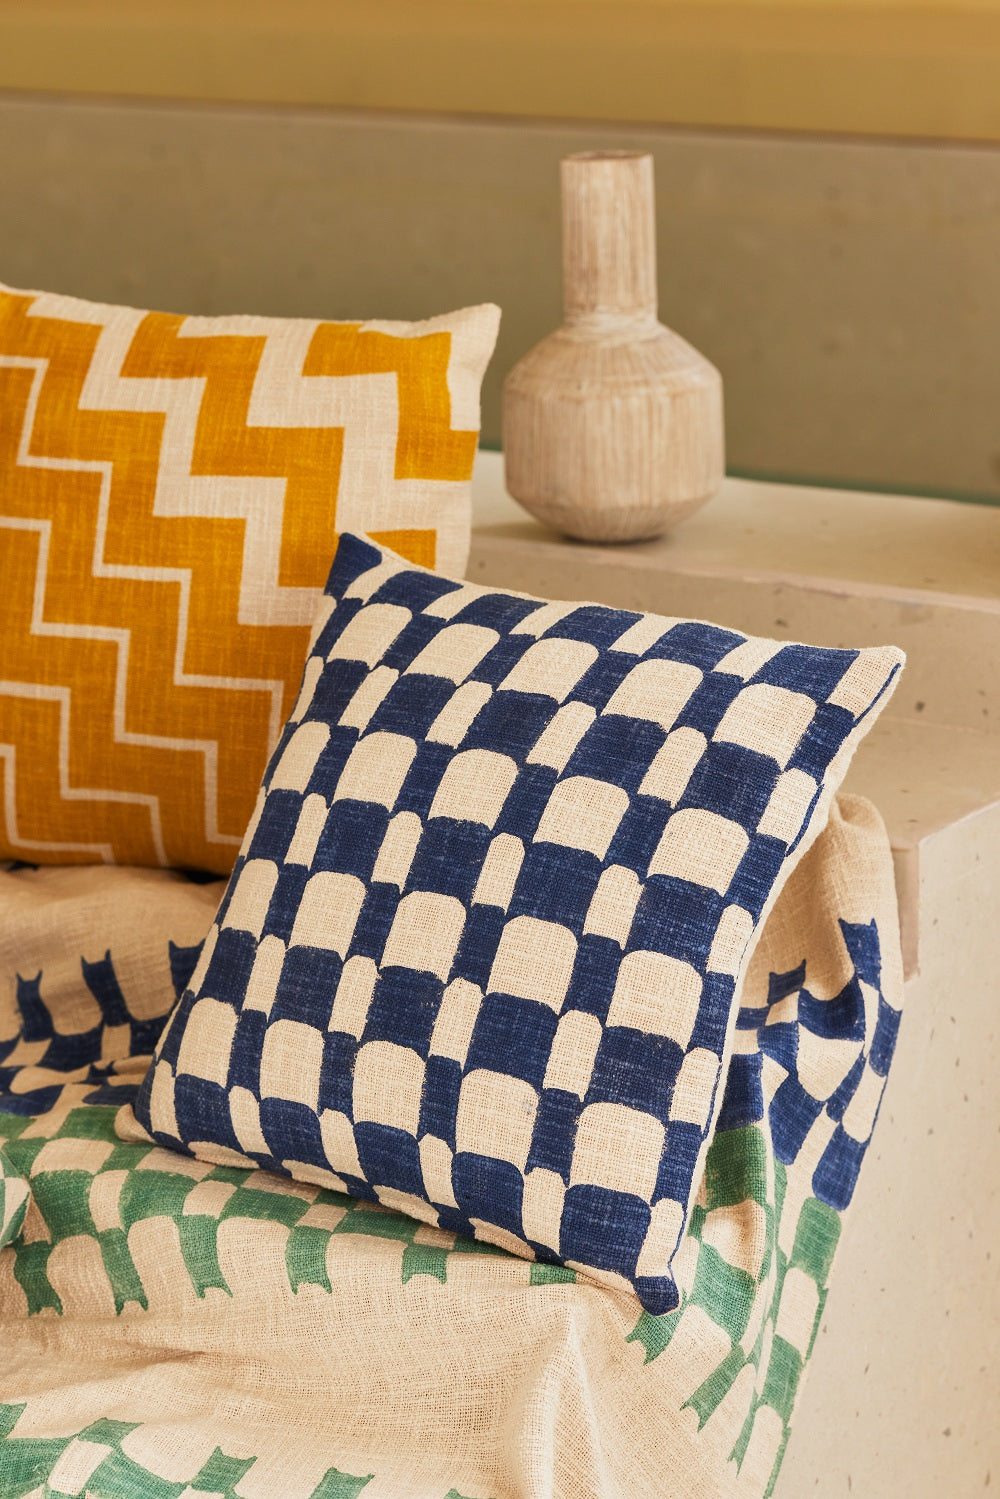 Aaakar Checkered Block Printed Pillow, Indigo - 18x18 inch by The Artisen - Sumiye Co